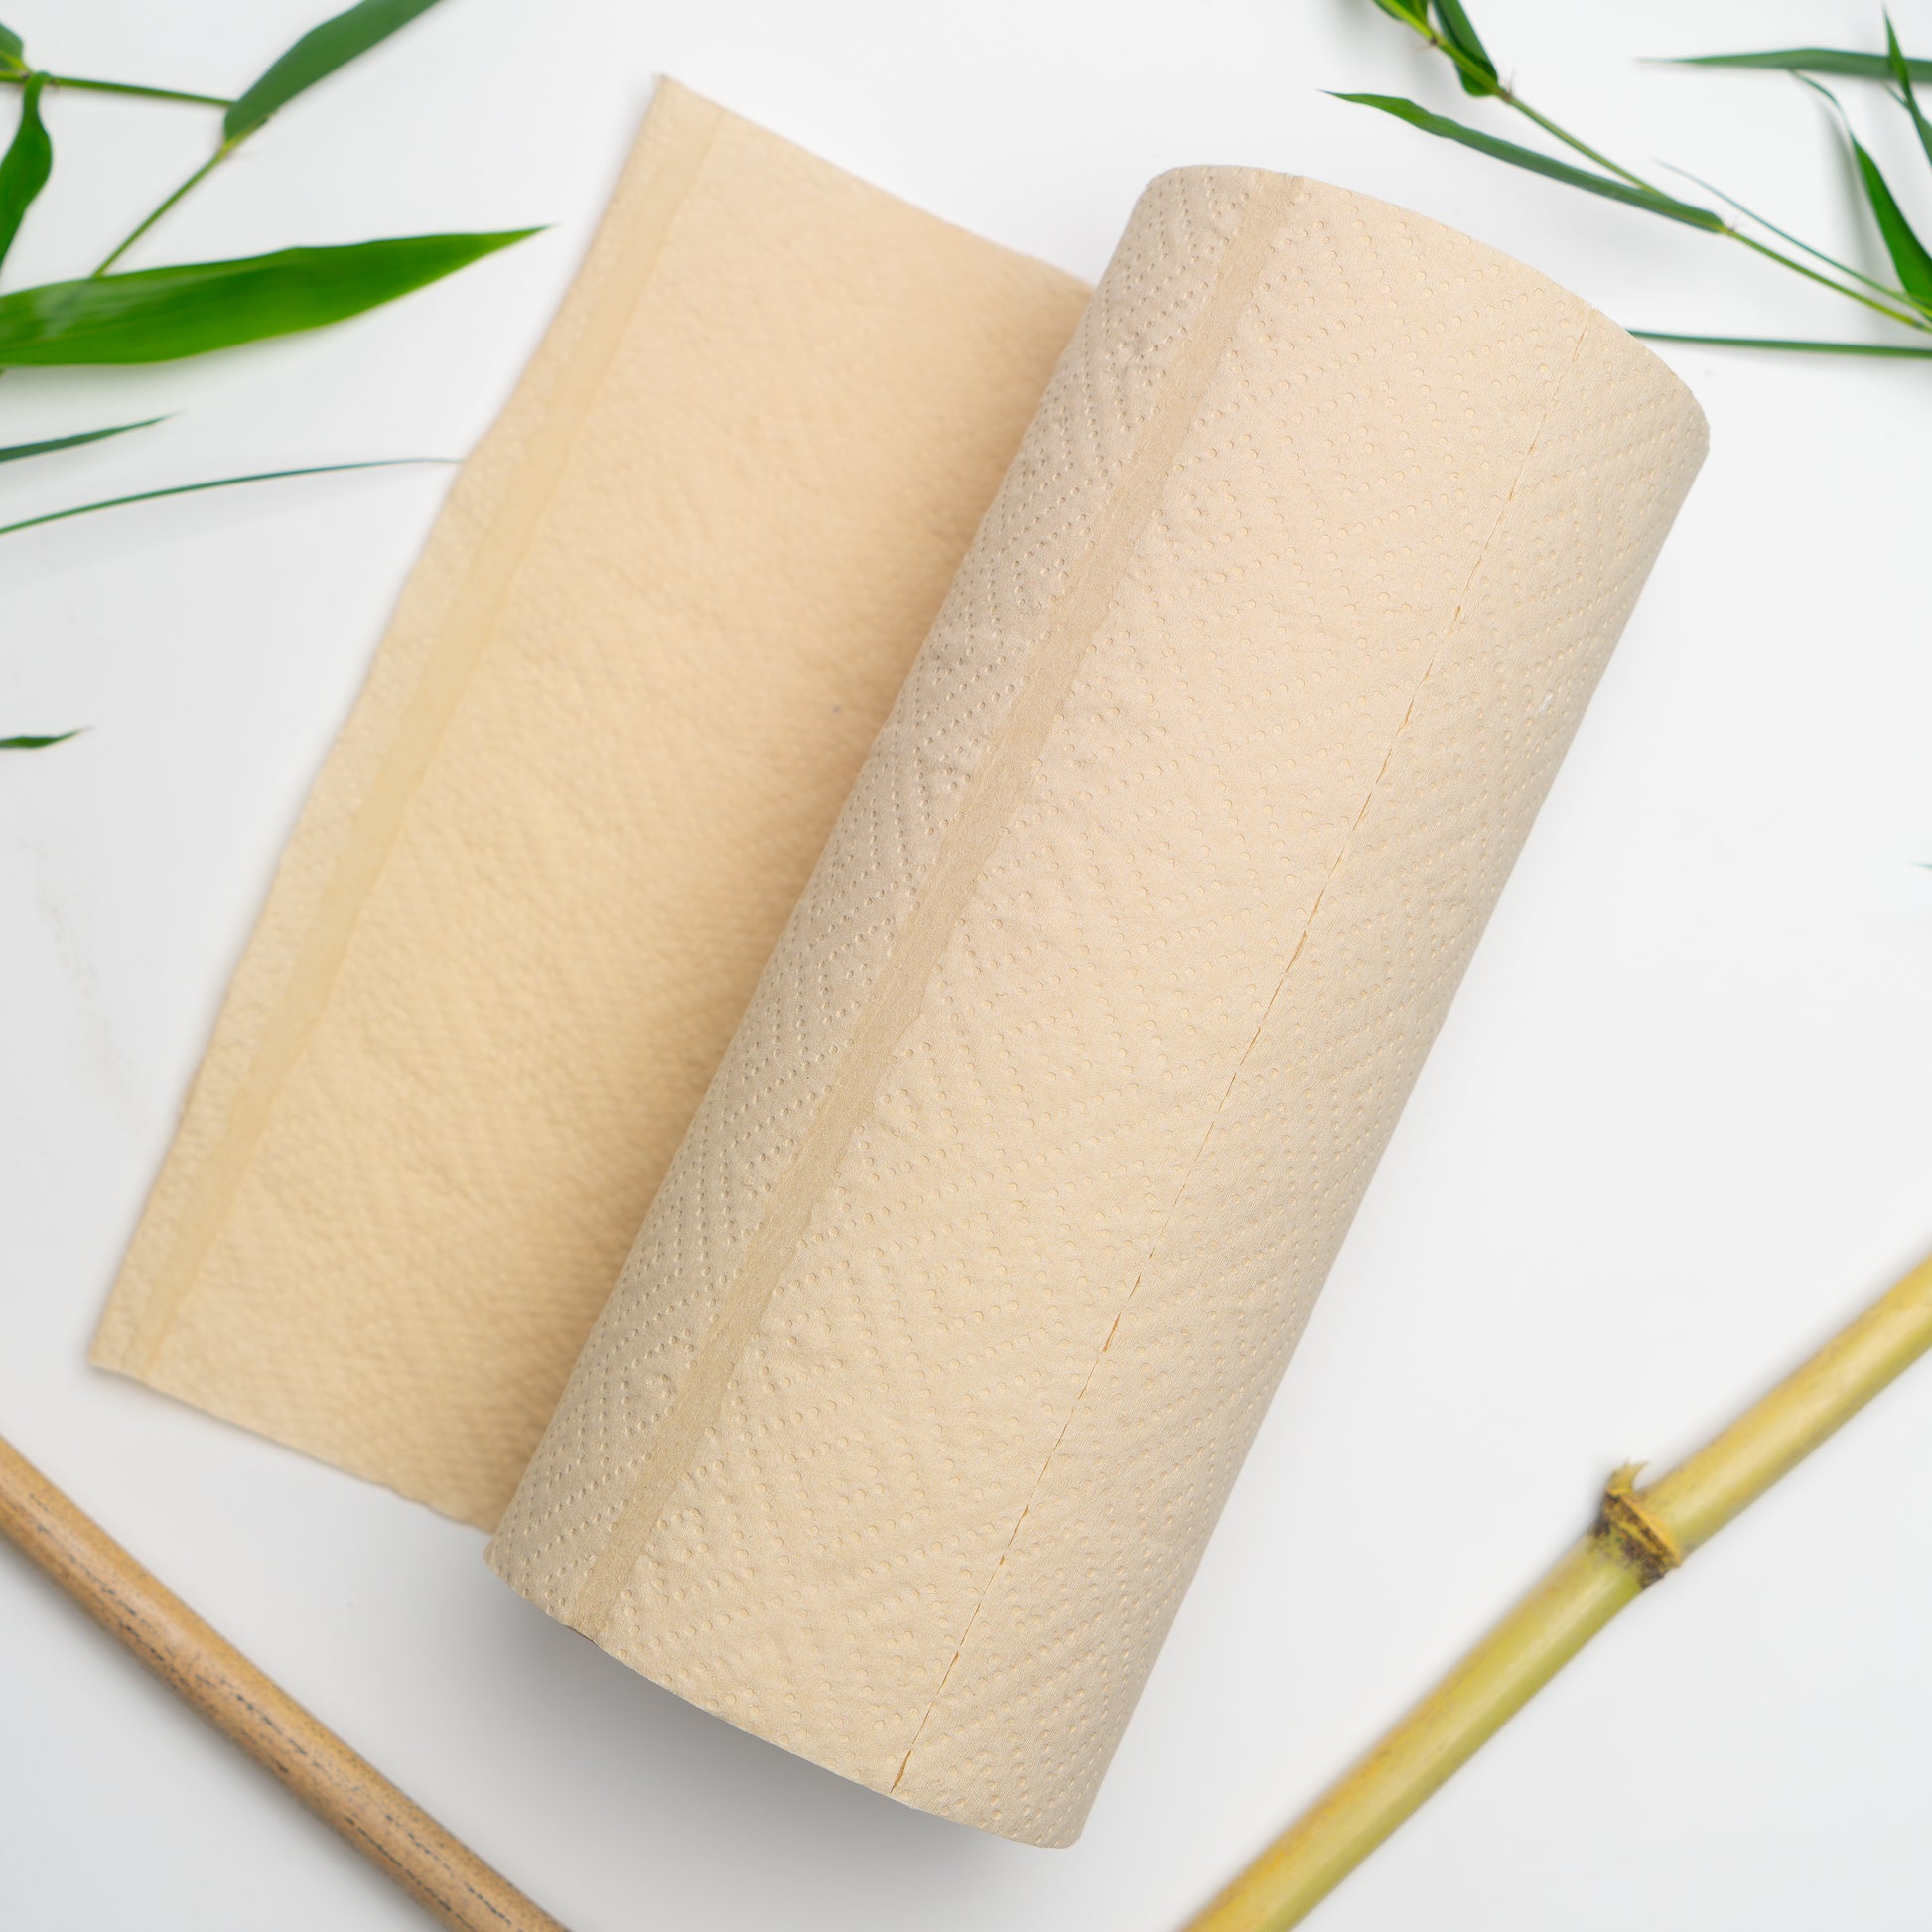 Repurpose 100% Bamboo Paper Towels, Tree Free Paper Towels, Plastic Free Packaging, 6 Rolls, 75 Sheets per Roll, FSC Certified